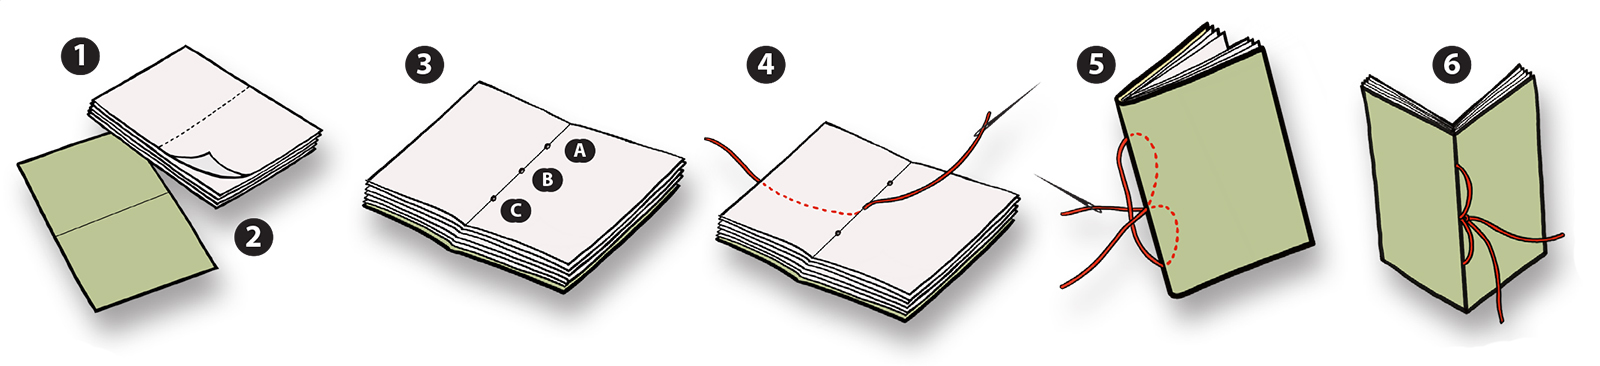 diy bookbinding instructions illustrations